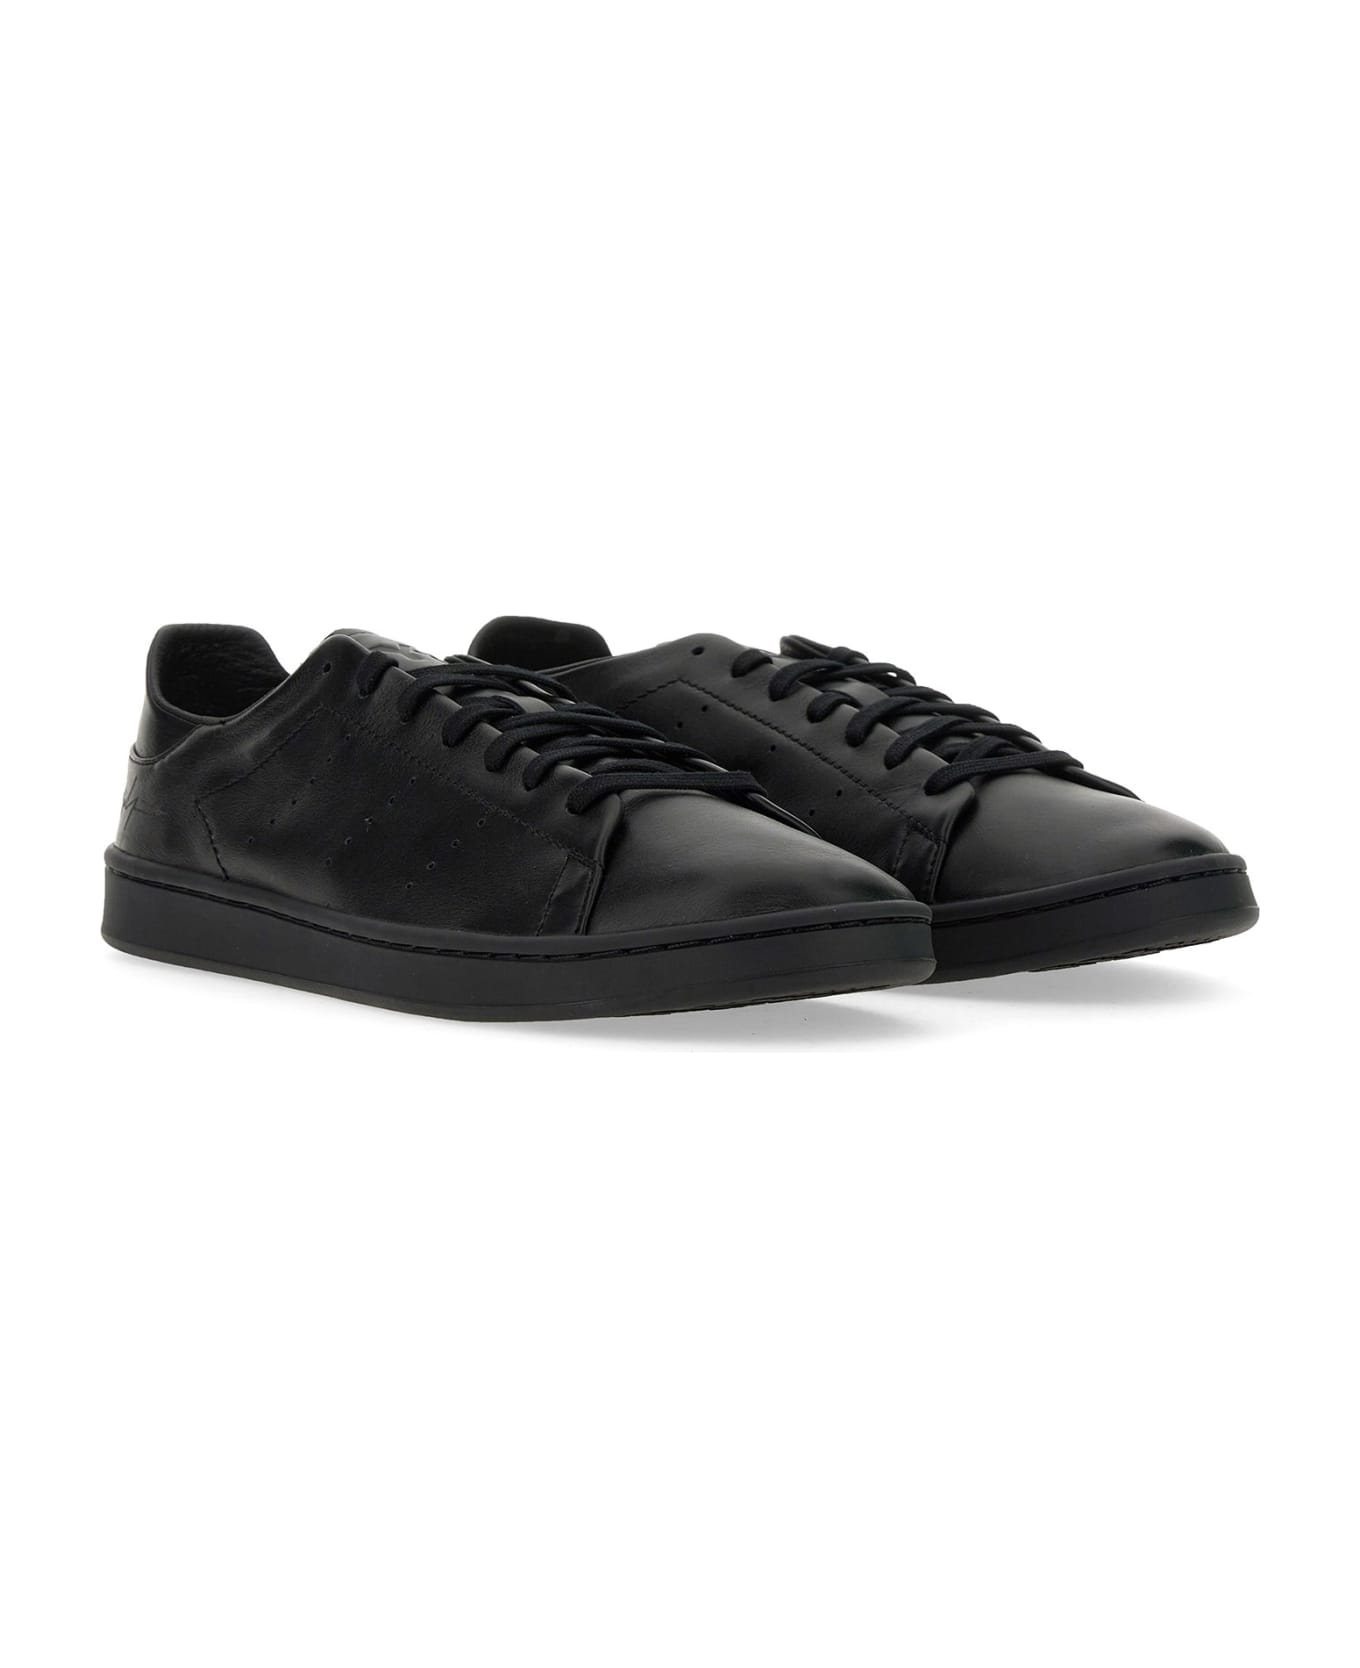 Y-3 Stan Smith Sneaker - Black